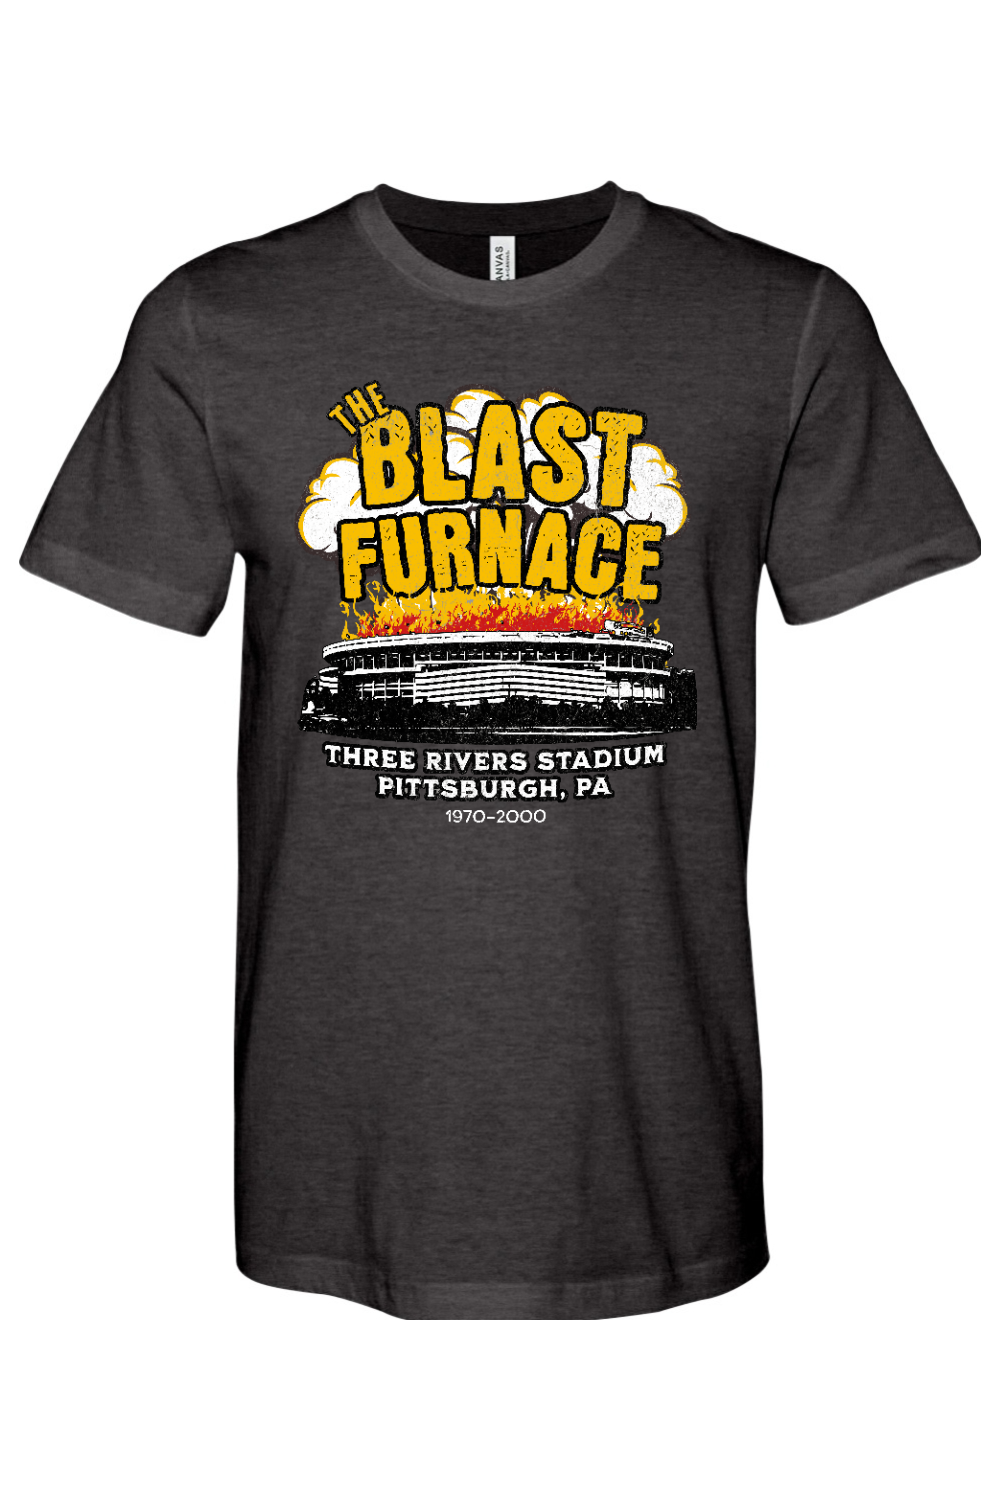 The Blast Furnace - Three Rivers Stadium - Yinzylvania